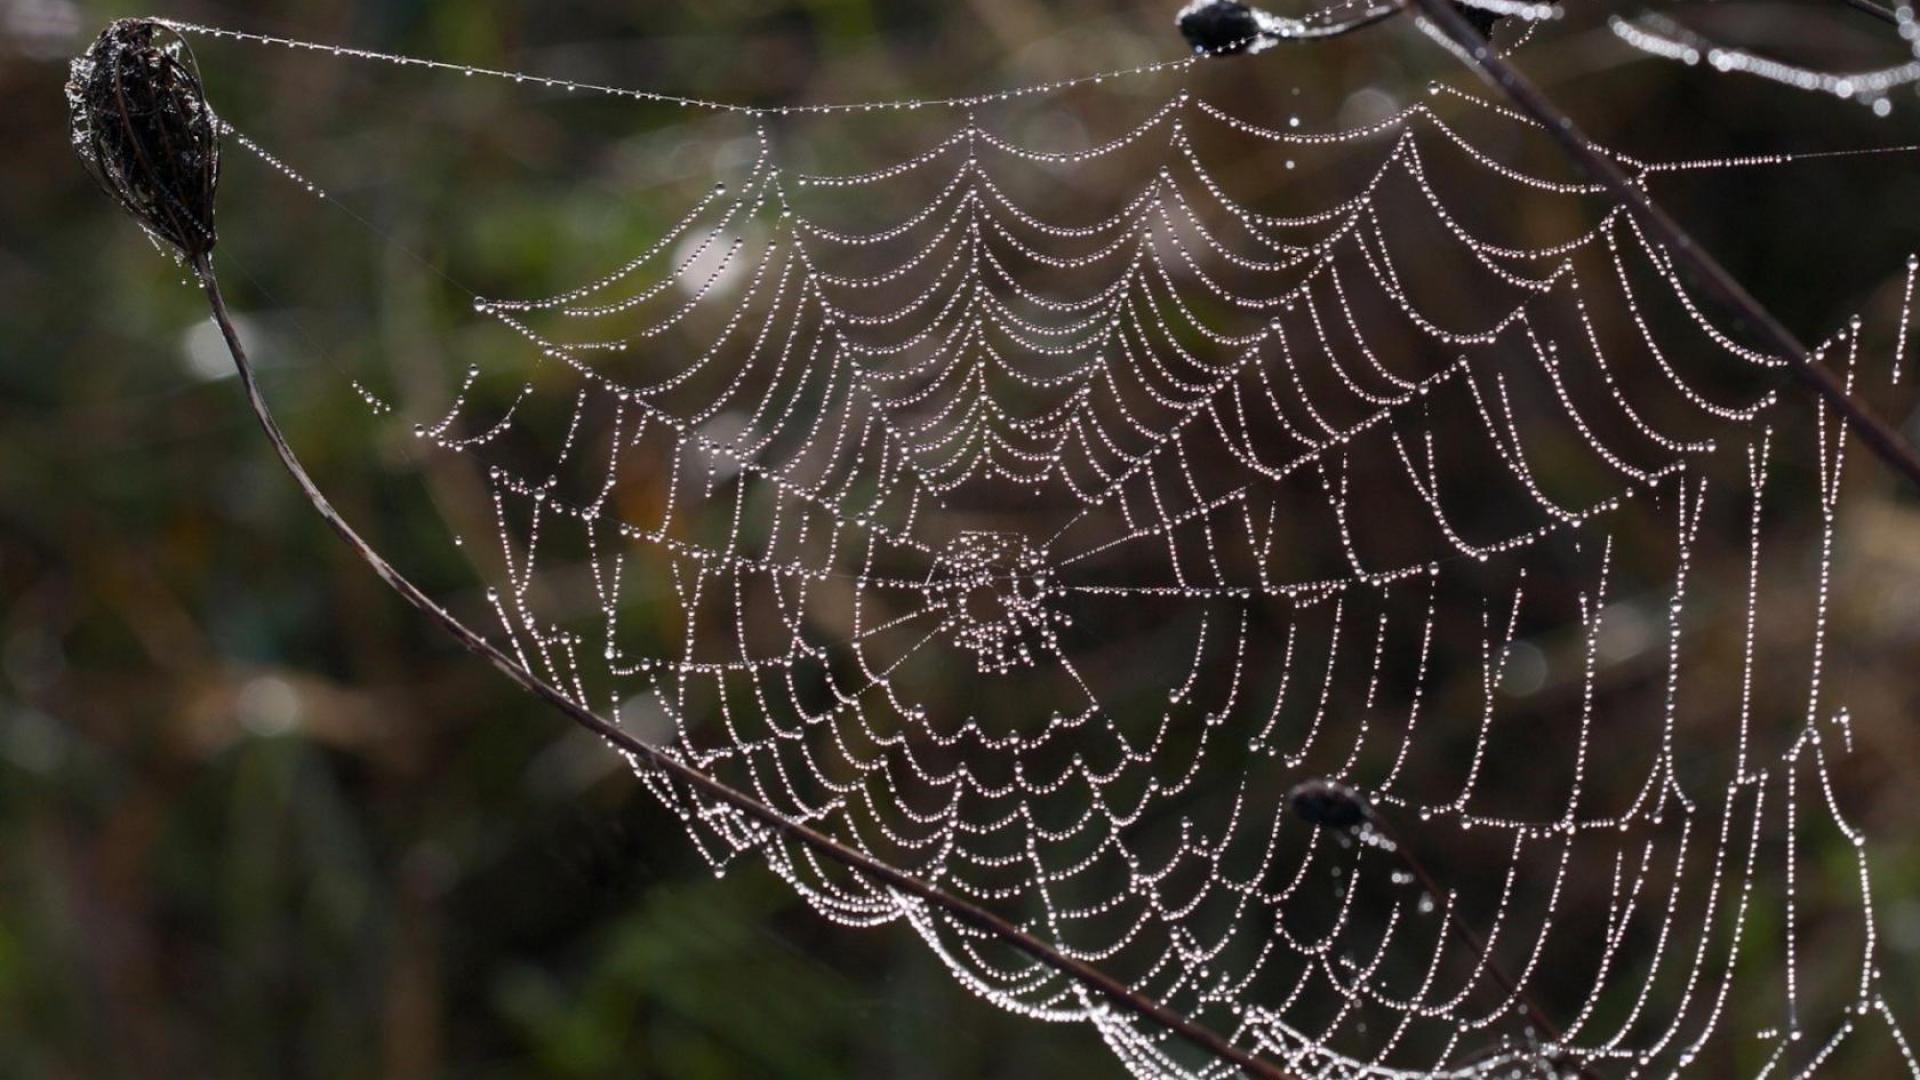 Wet Spider Web wallpaper | (55558)